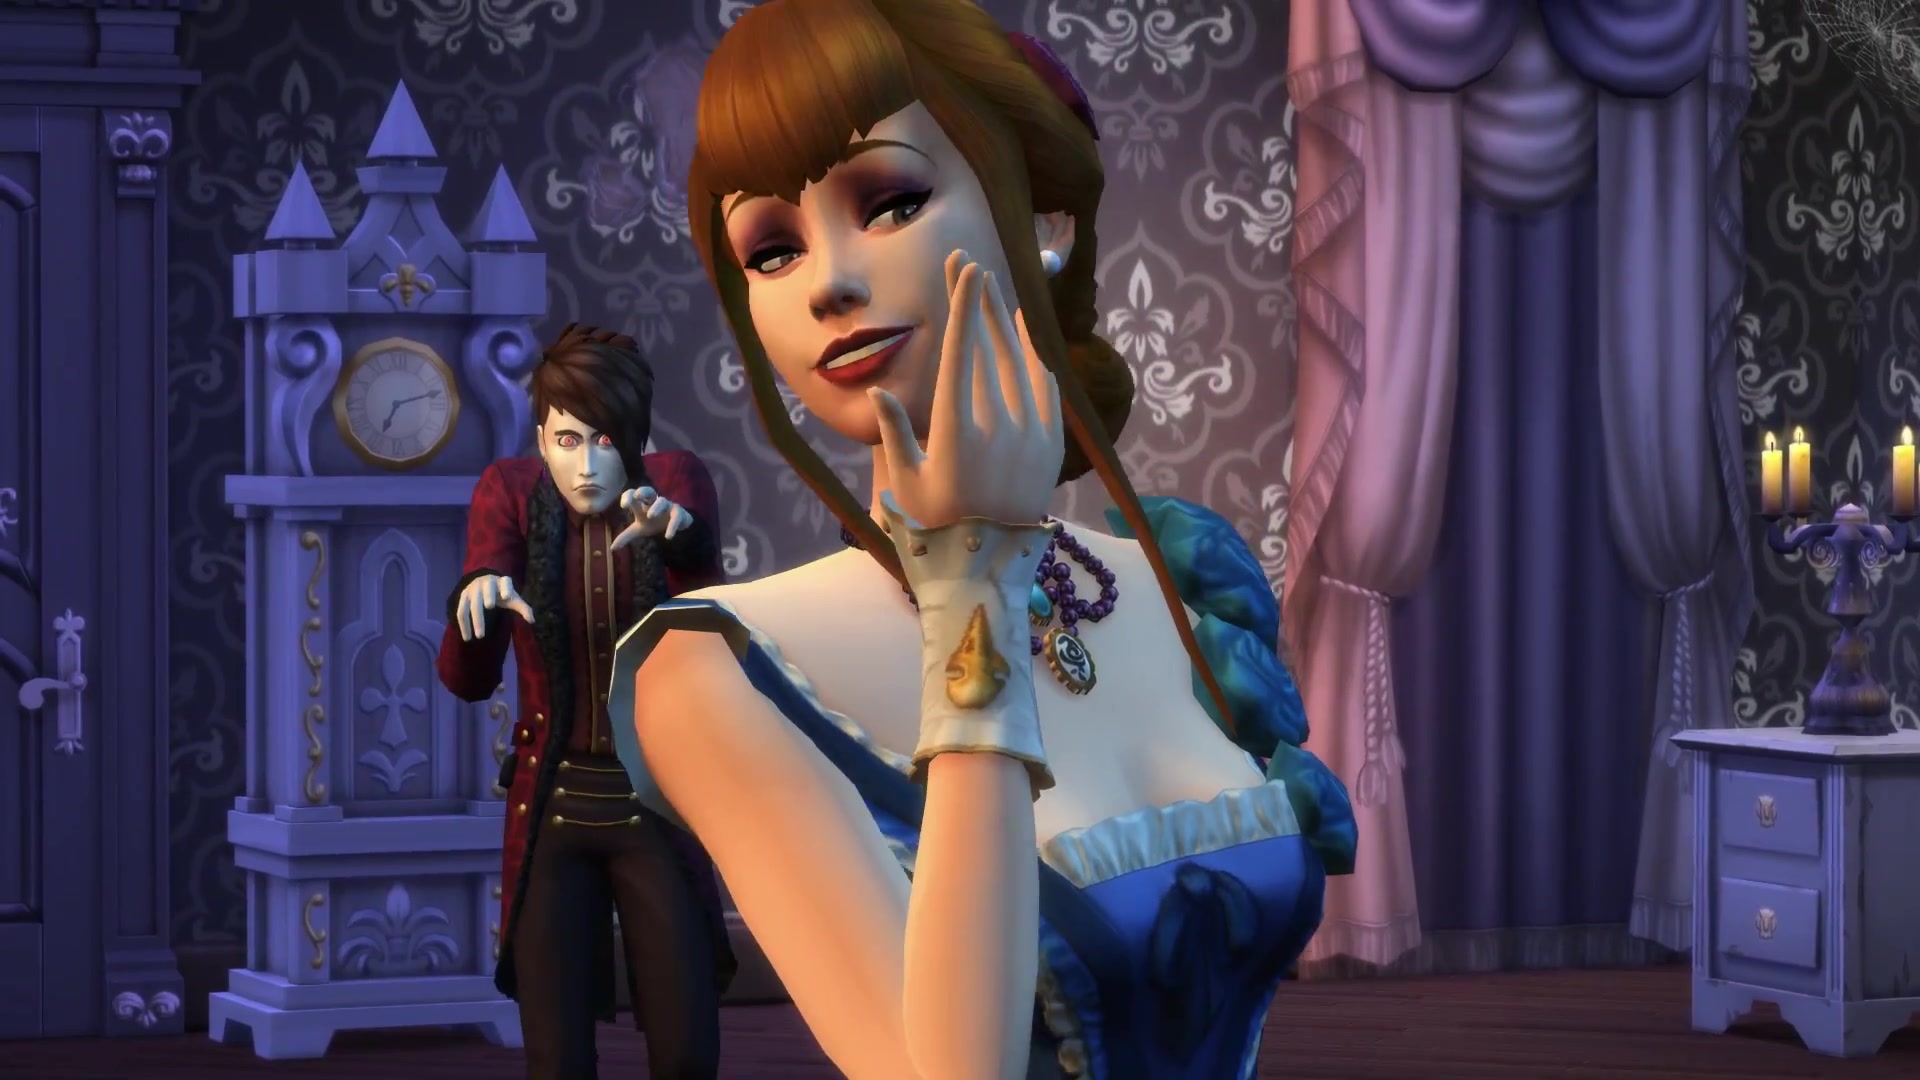 The Sims 4 Vampires Game Pack: 70+ Trailer Screens